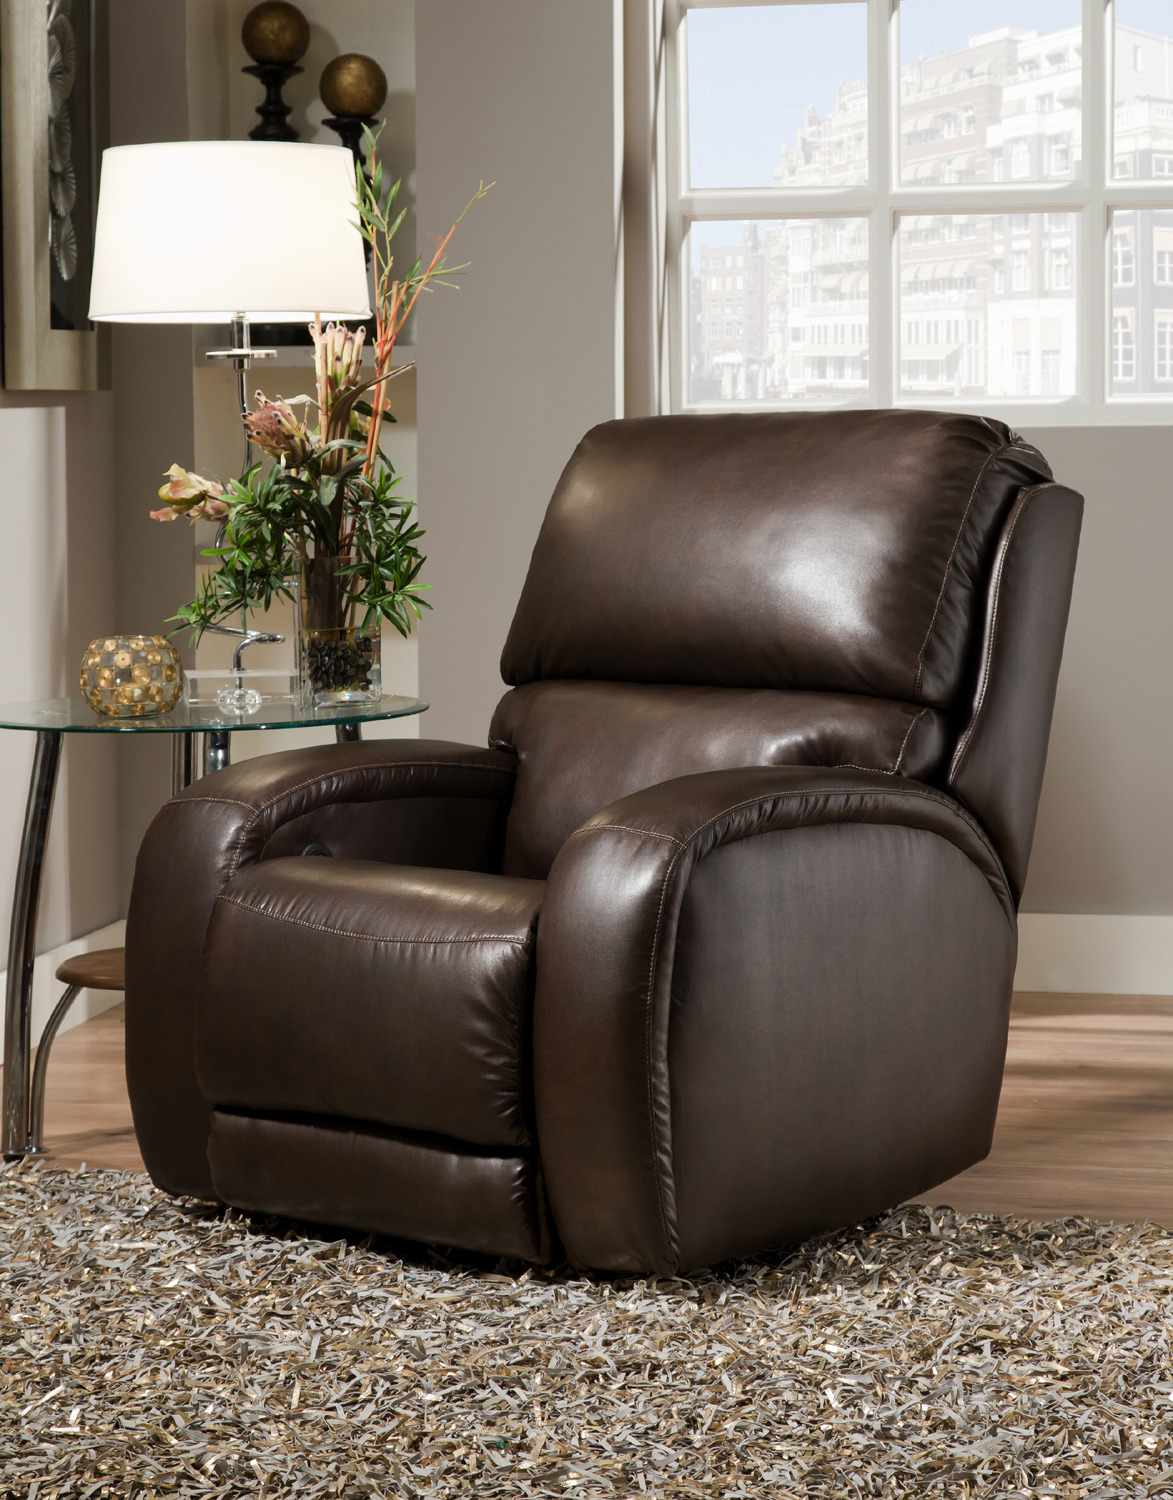 Choice Leather Furniture 1027 Ne Loop, Leather Chairs San Antonio